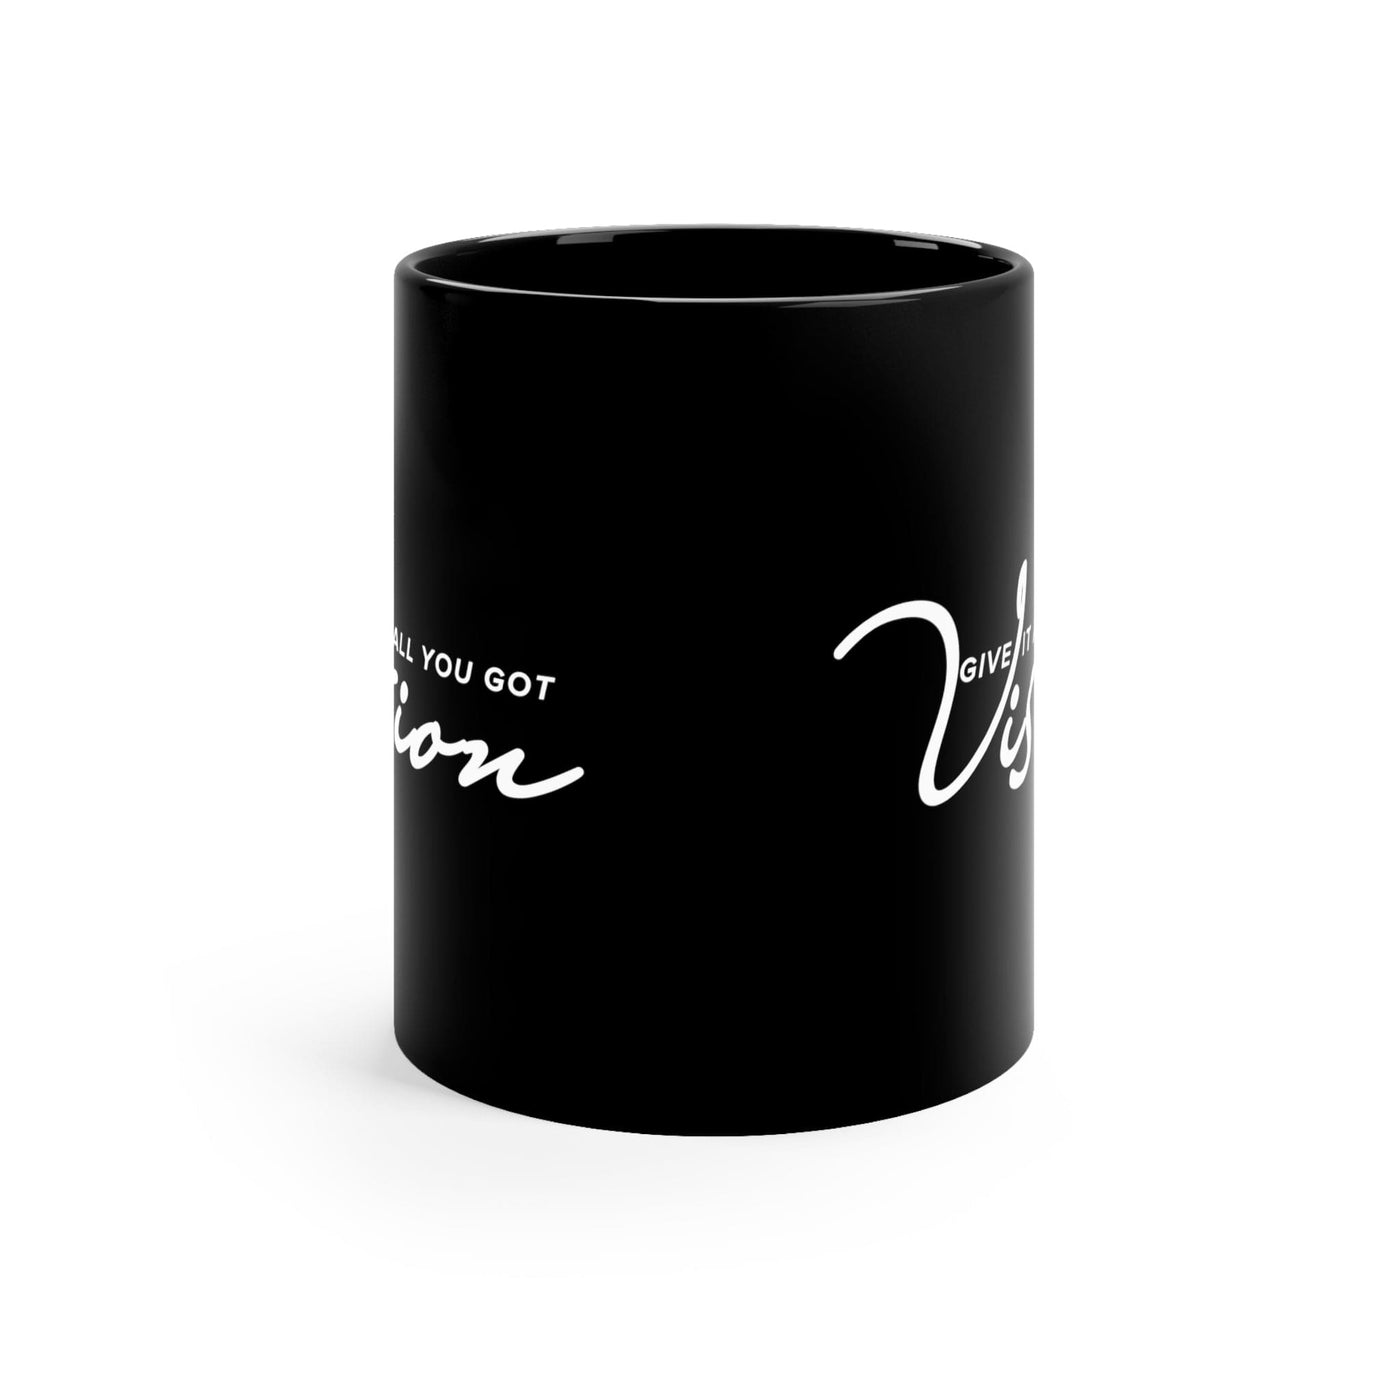 Black Ceramic Mug - 11oz Vision - Give It All You Got - Decorative | Ceramic